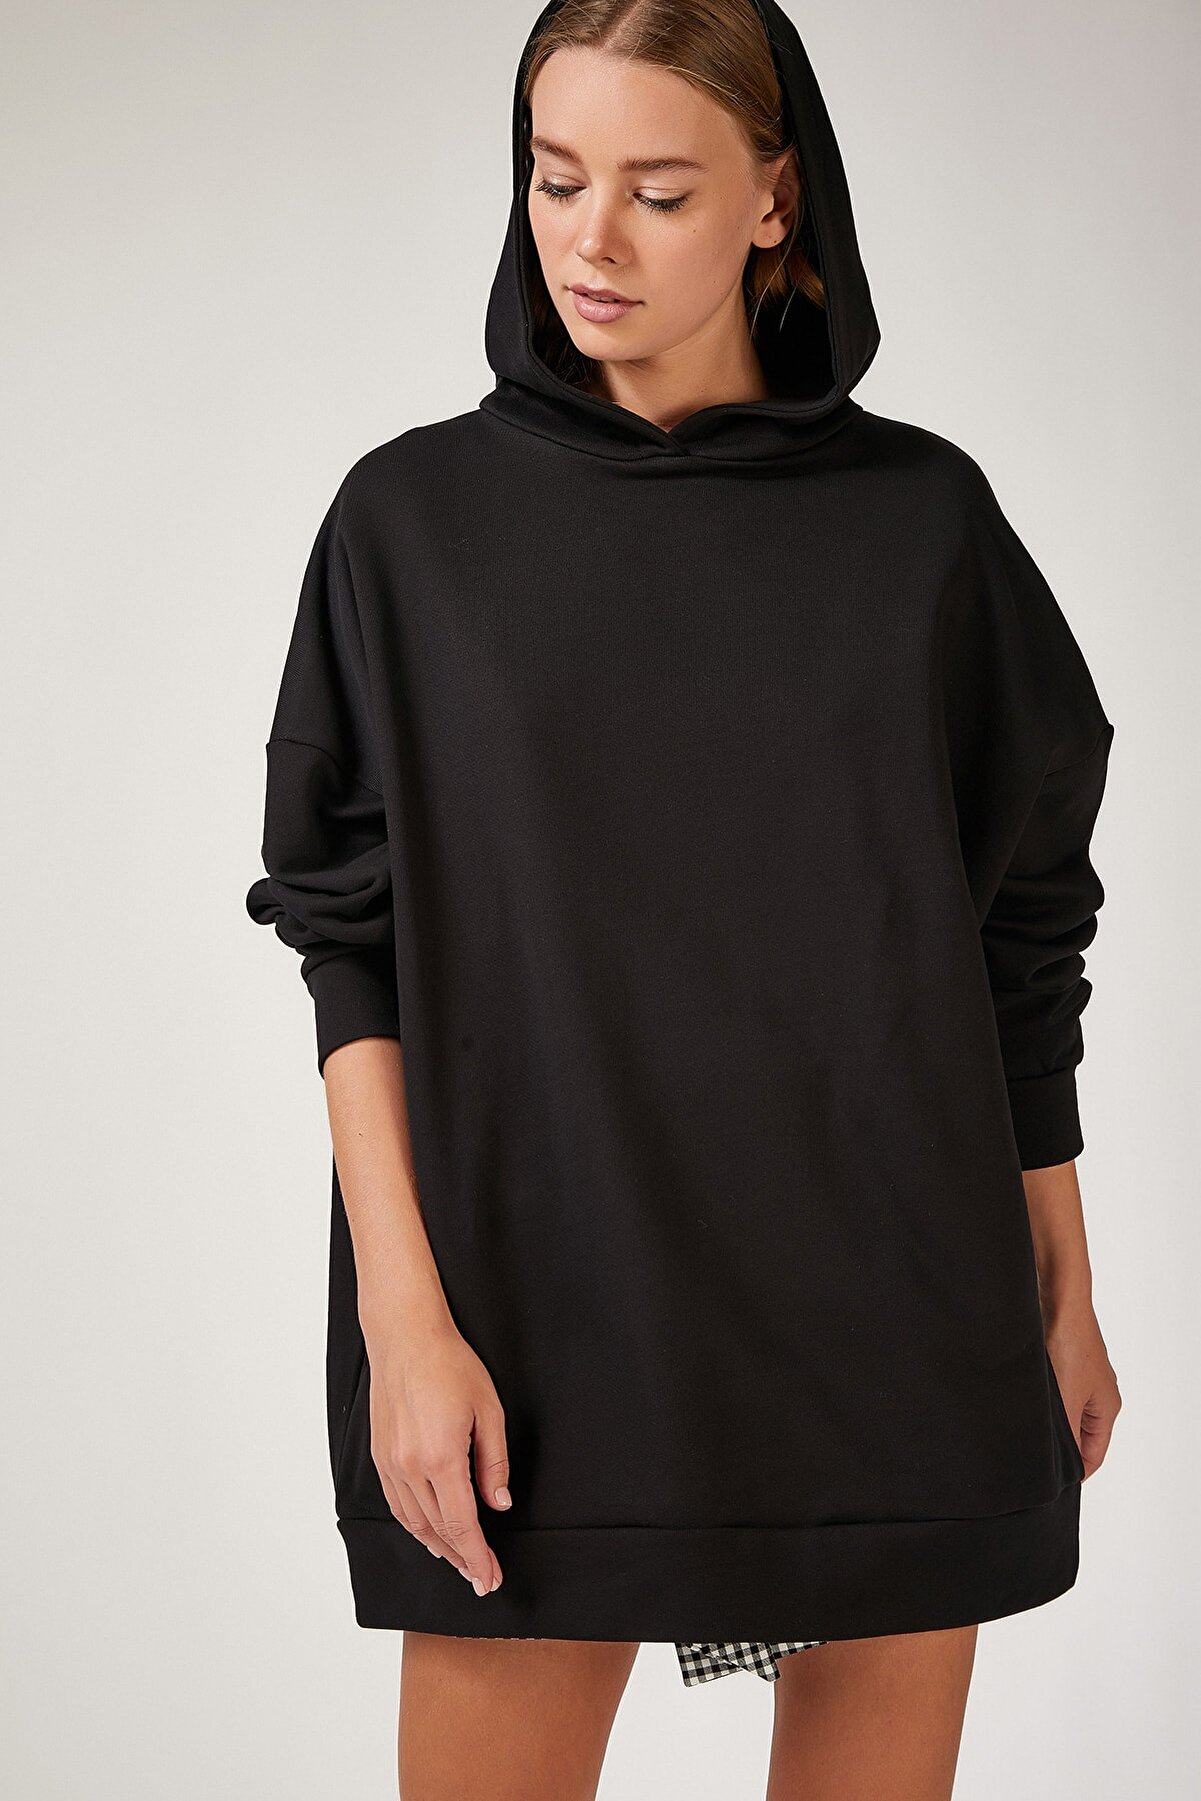 Happiness İstanbul Kadın Siyah Kapüşonlu Oversize Sweatshirt FN02305